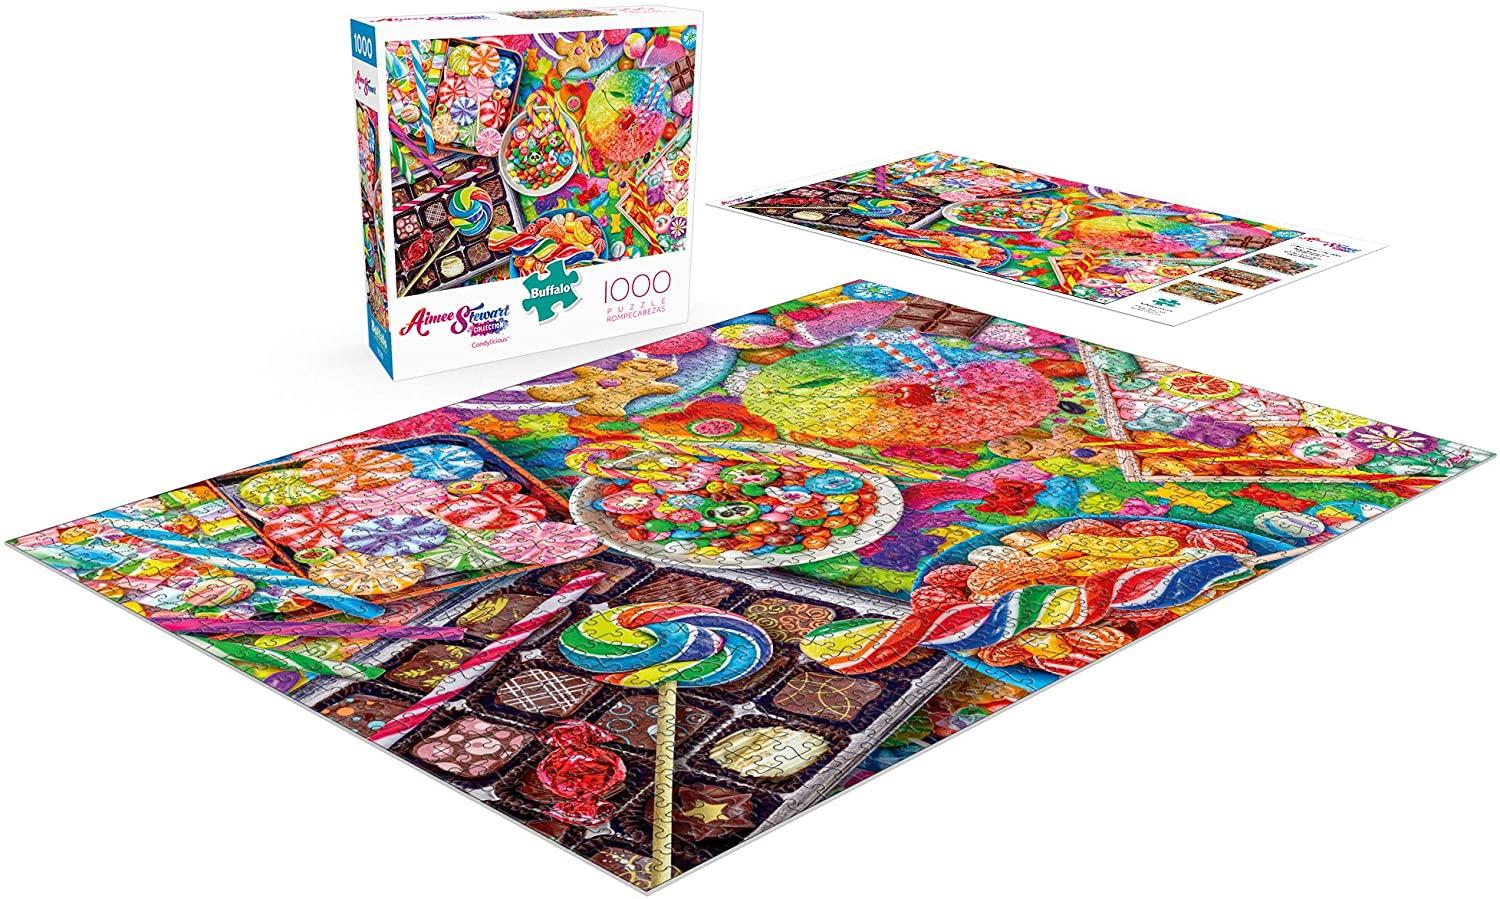 2 1000-Piece Buffalo Games Aimee Stewart Jigsaw Puzzle for $10.89